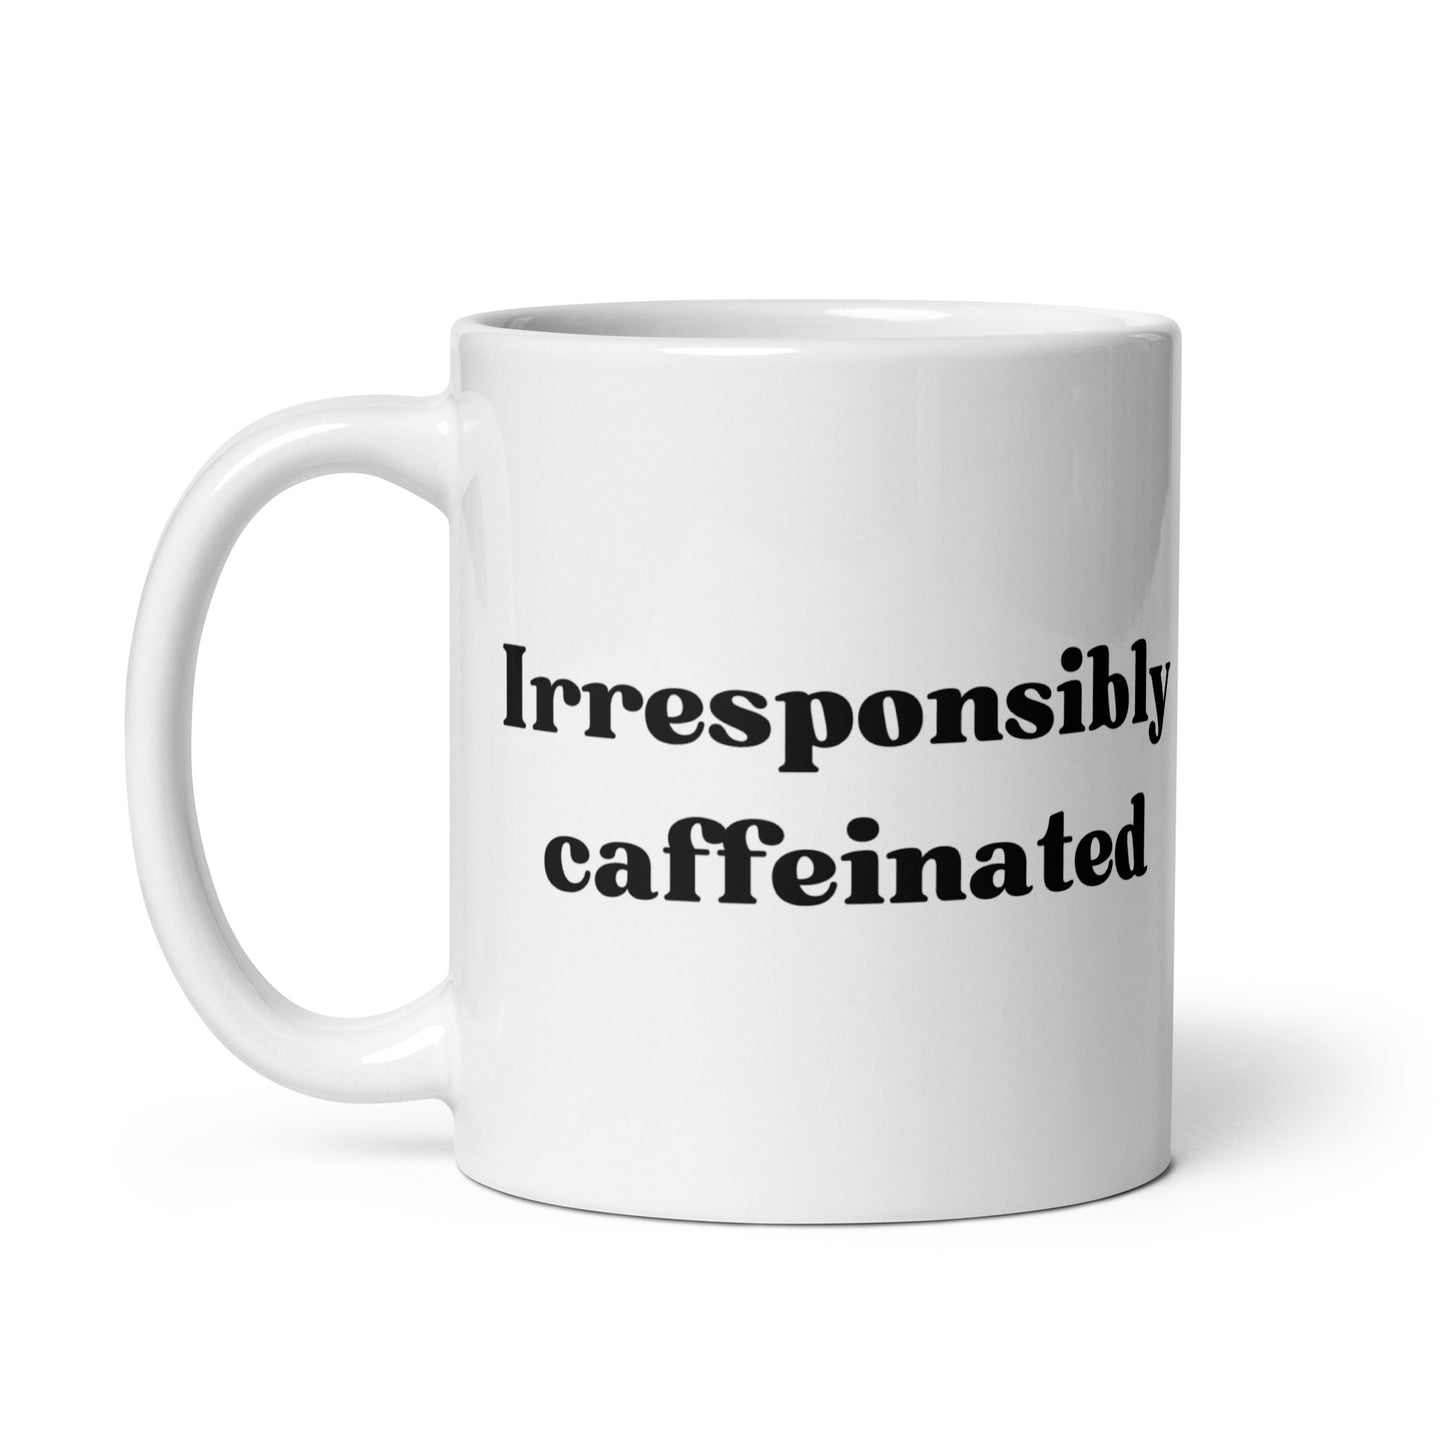 Funny Coffee Mug: "Irresponsibly caffeinated"